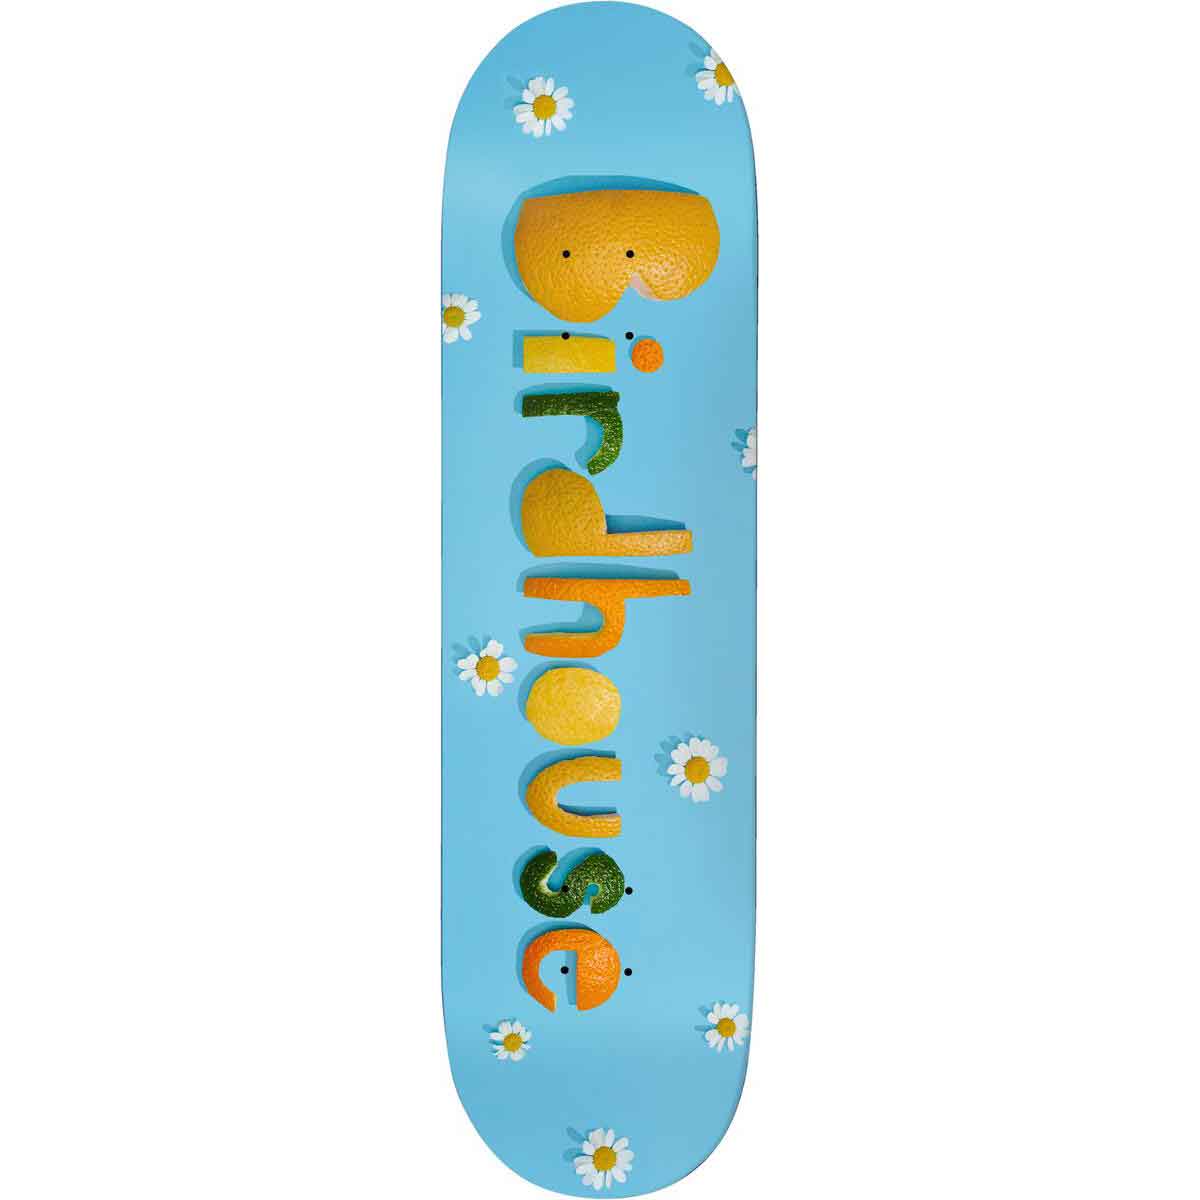 Birdhouse Skateboard Deck Lizzie Armanto Cherrypicked 8.0" x 31.5" Assorted Col 